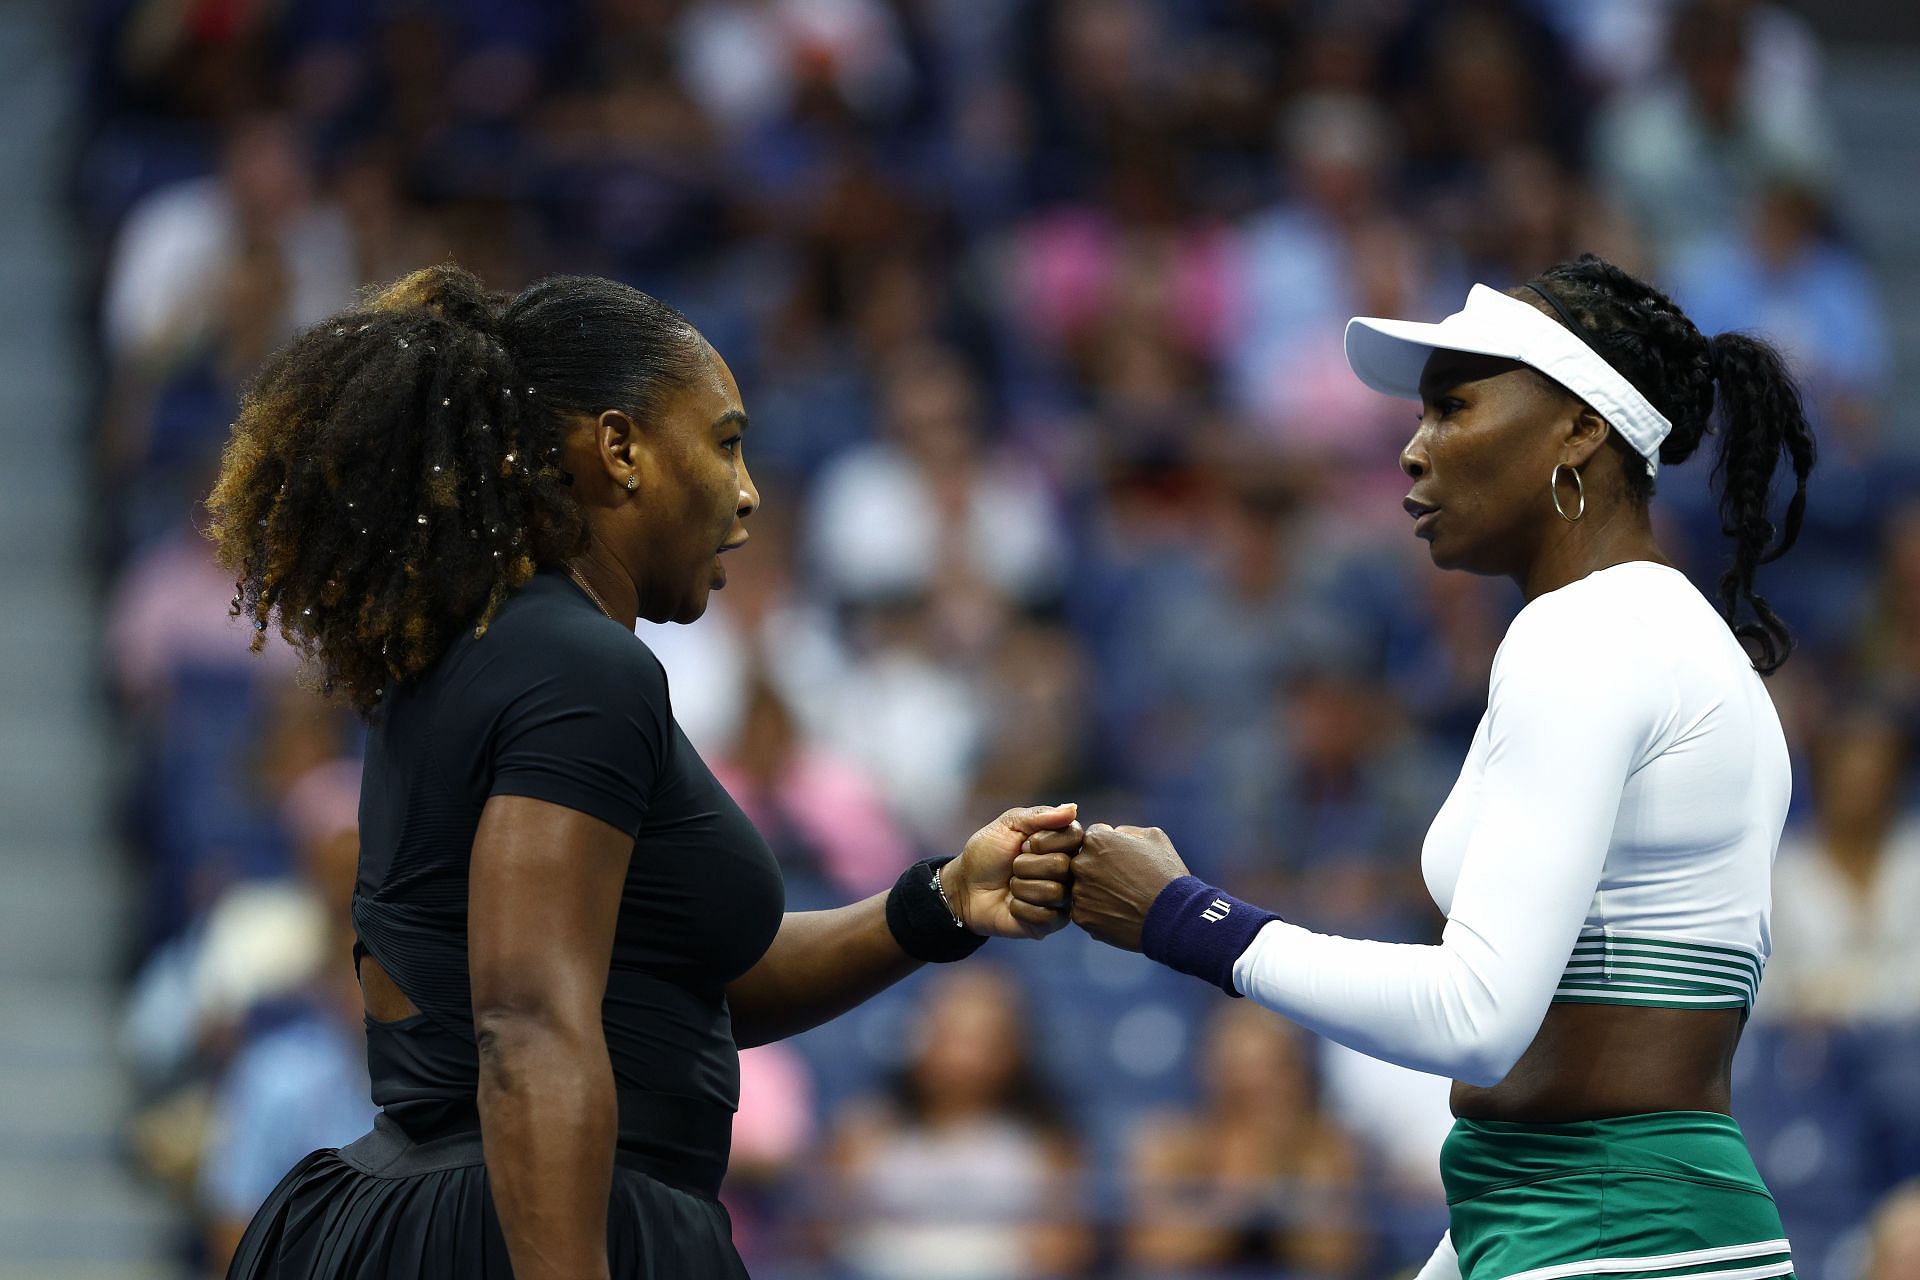 Serena Williams and Venus Williams at the 2022 US Open.